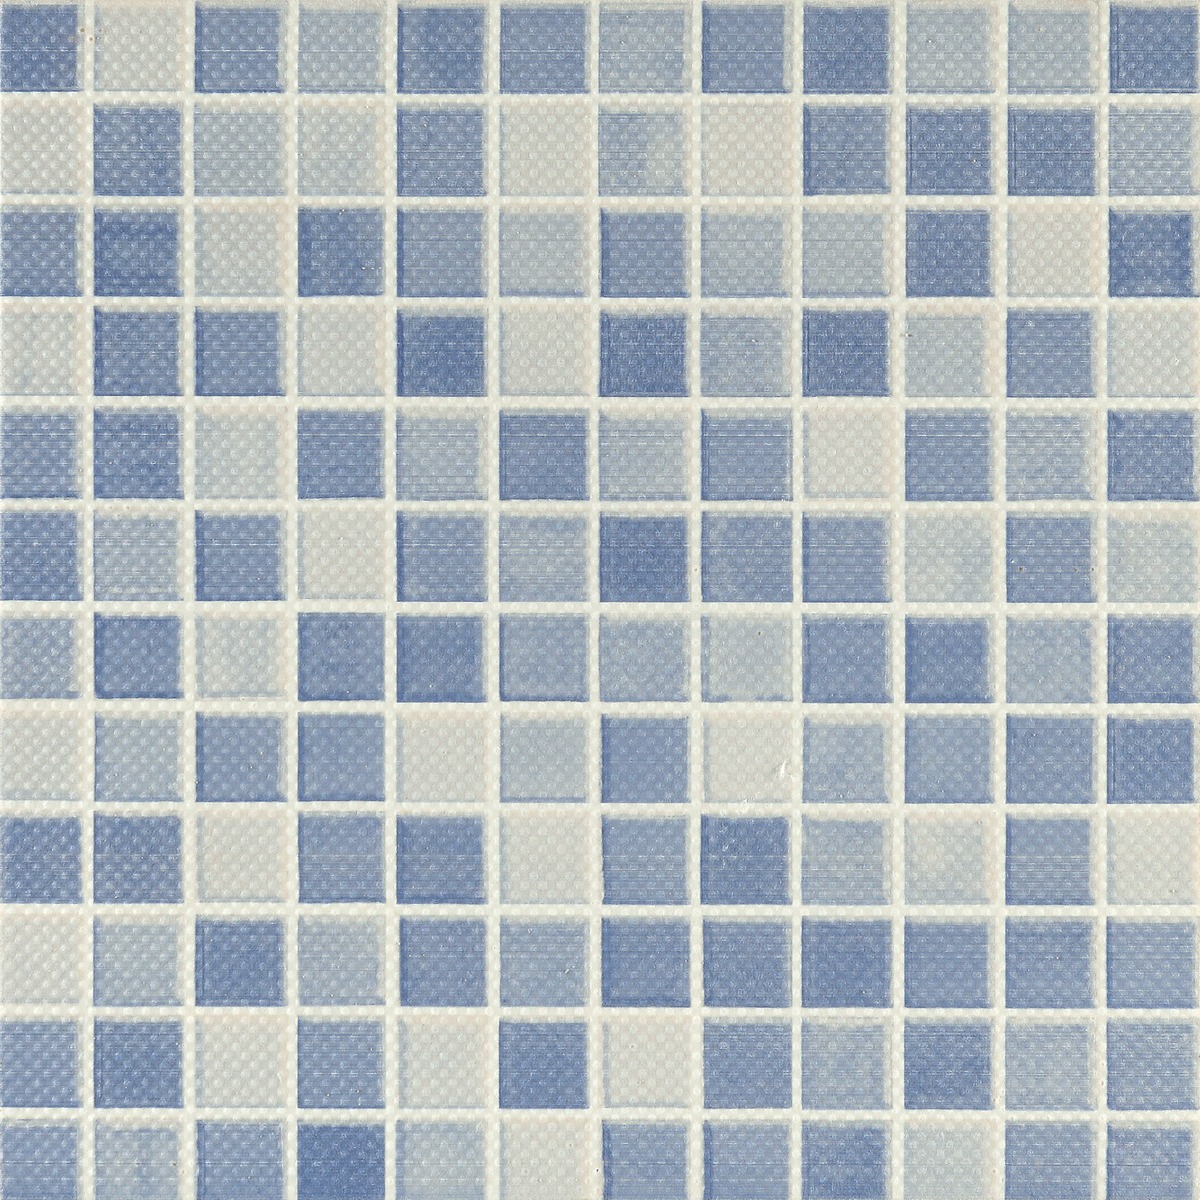 Bathroom Tiles for Accent Tiles